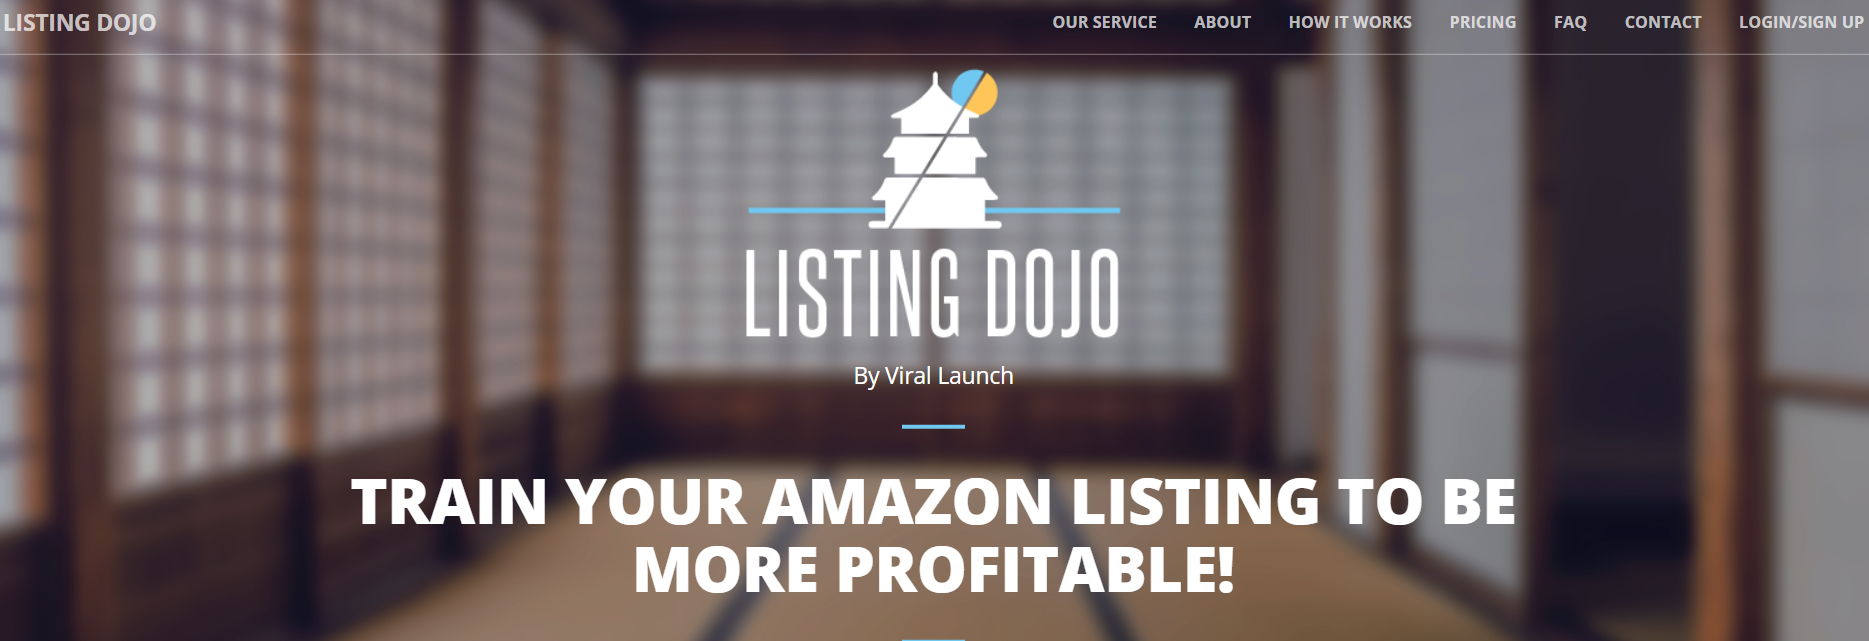 Viral Launch Review - Listing Dojo